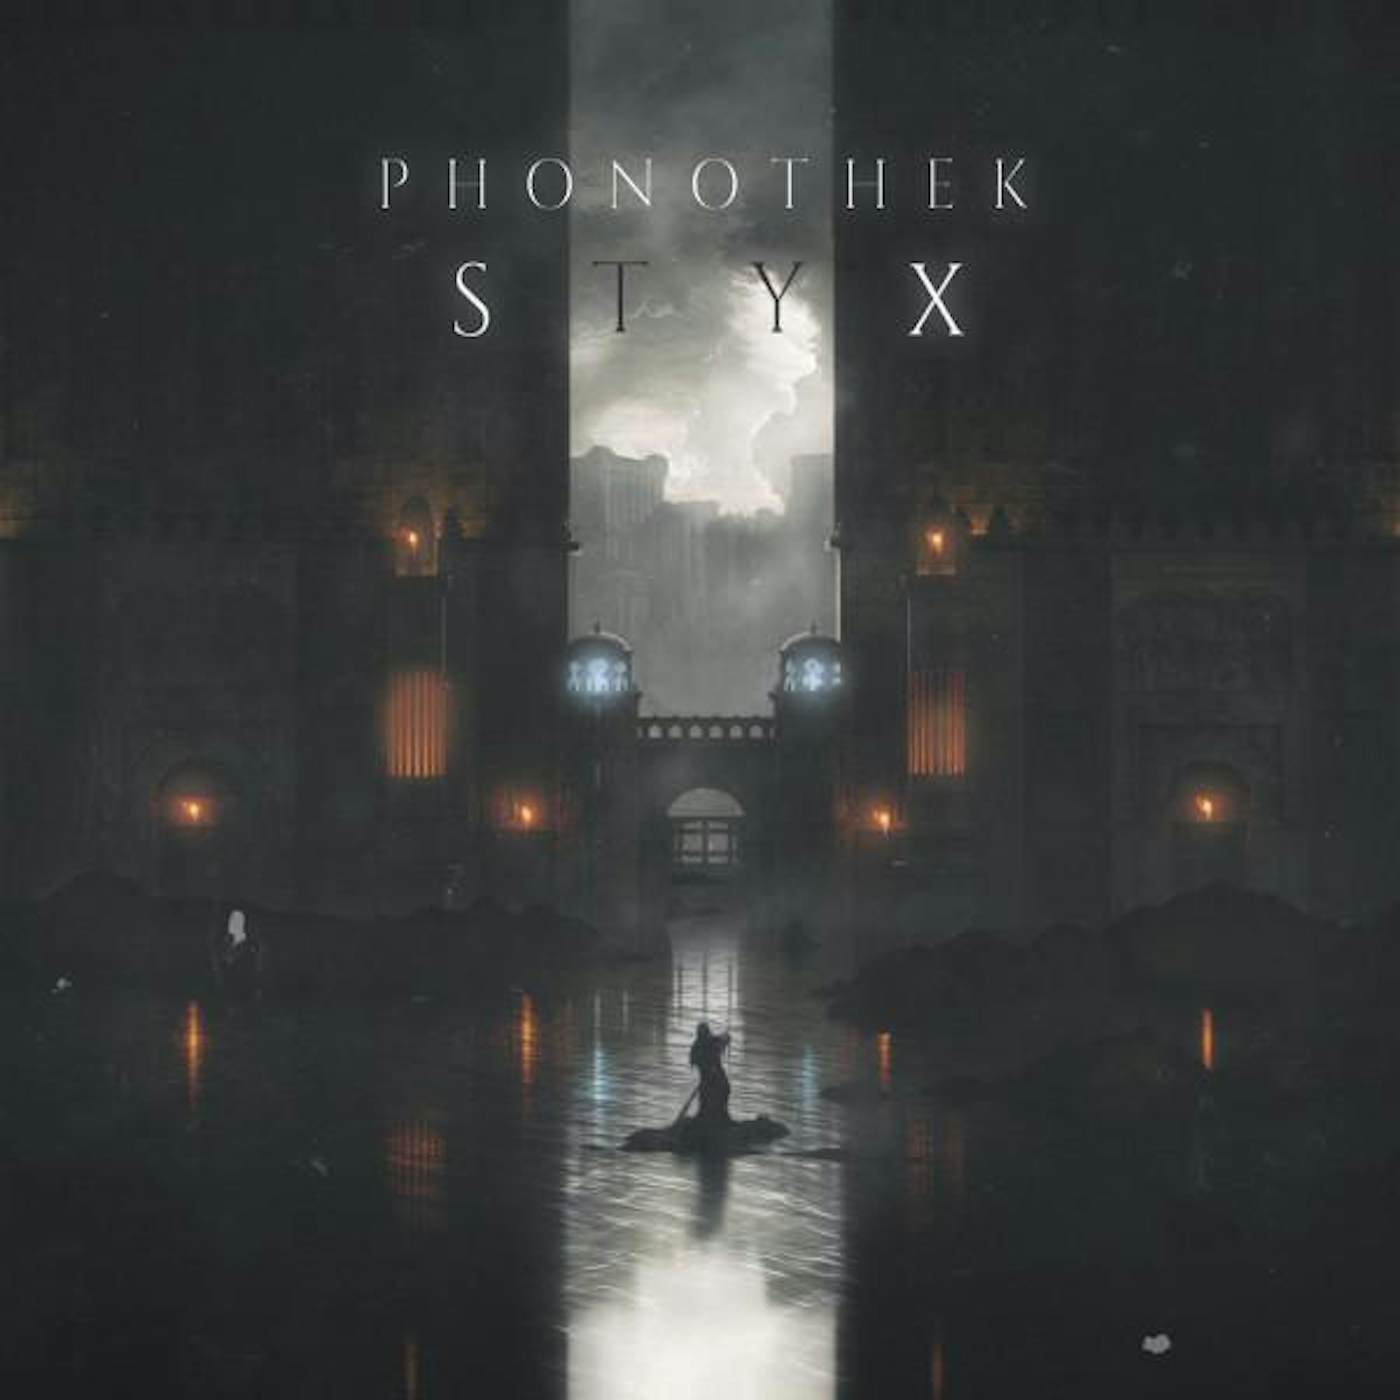 Phonothek STYX CD